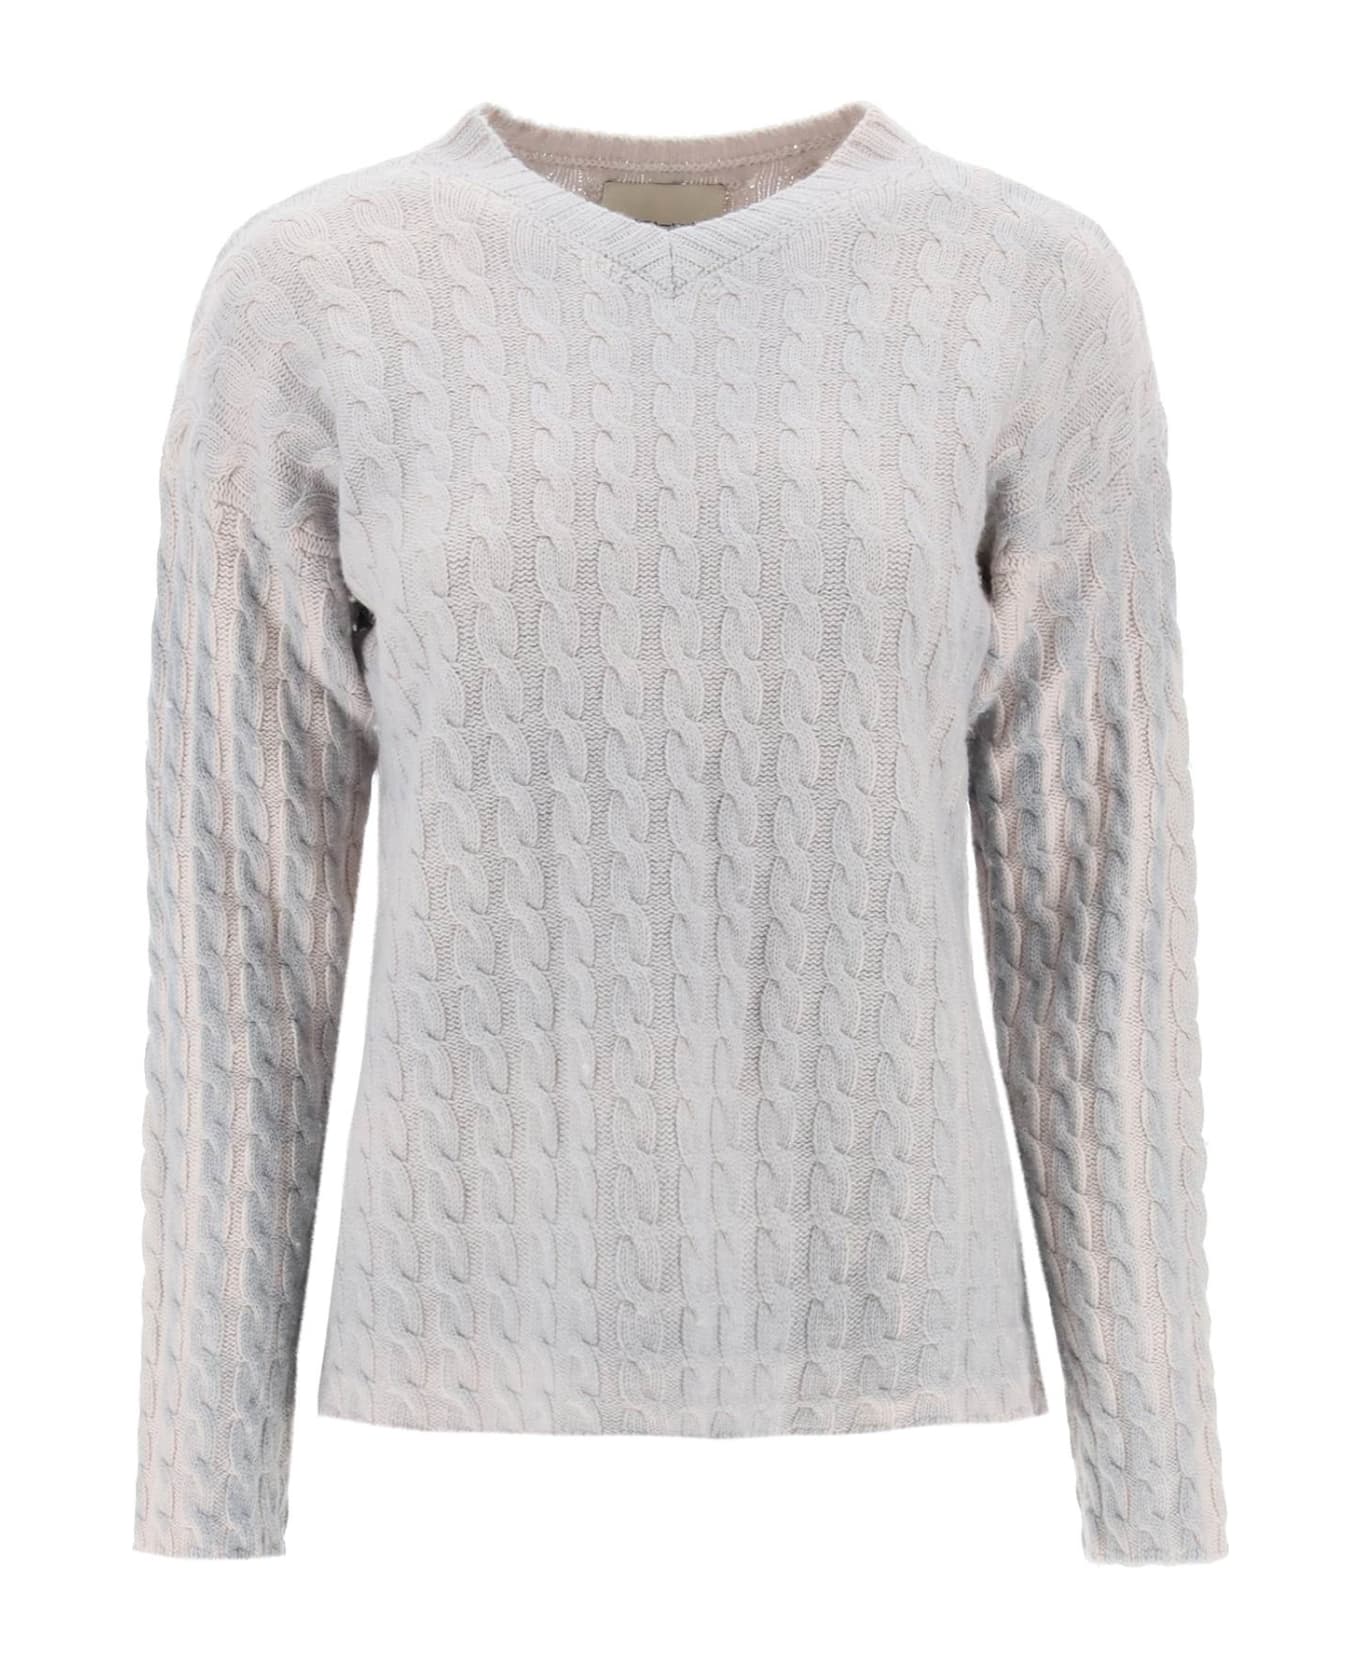 Paloma Wool Ainhoa Cable Knit Sweater - GRIS MEDIO (Grey)